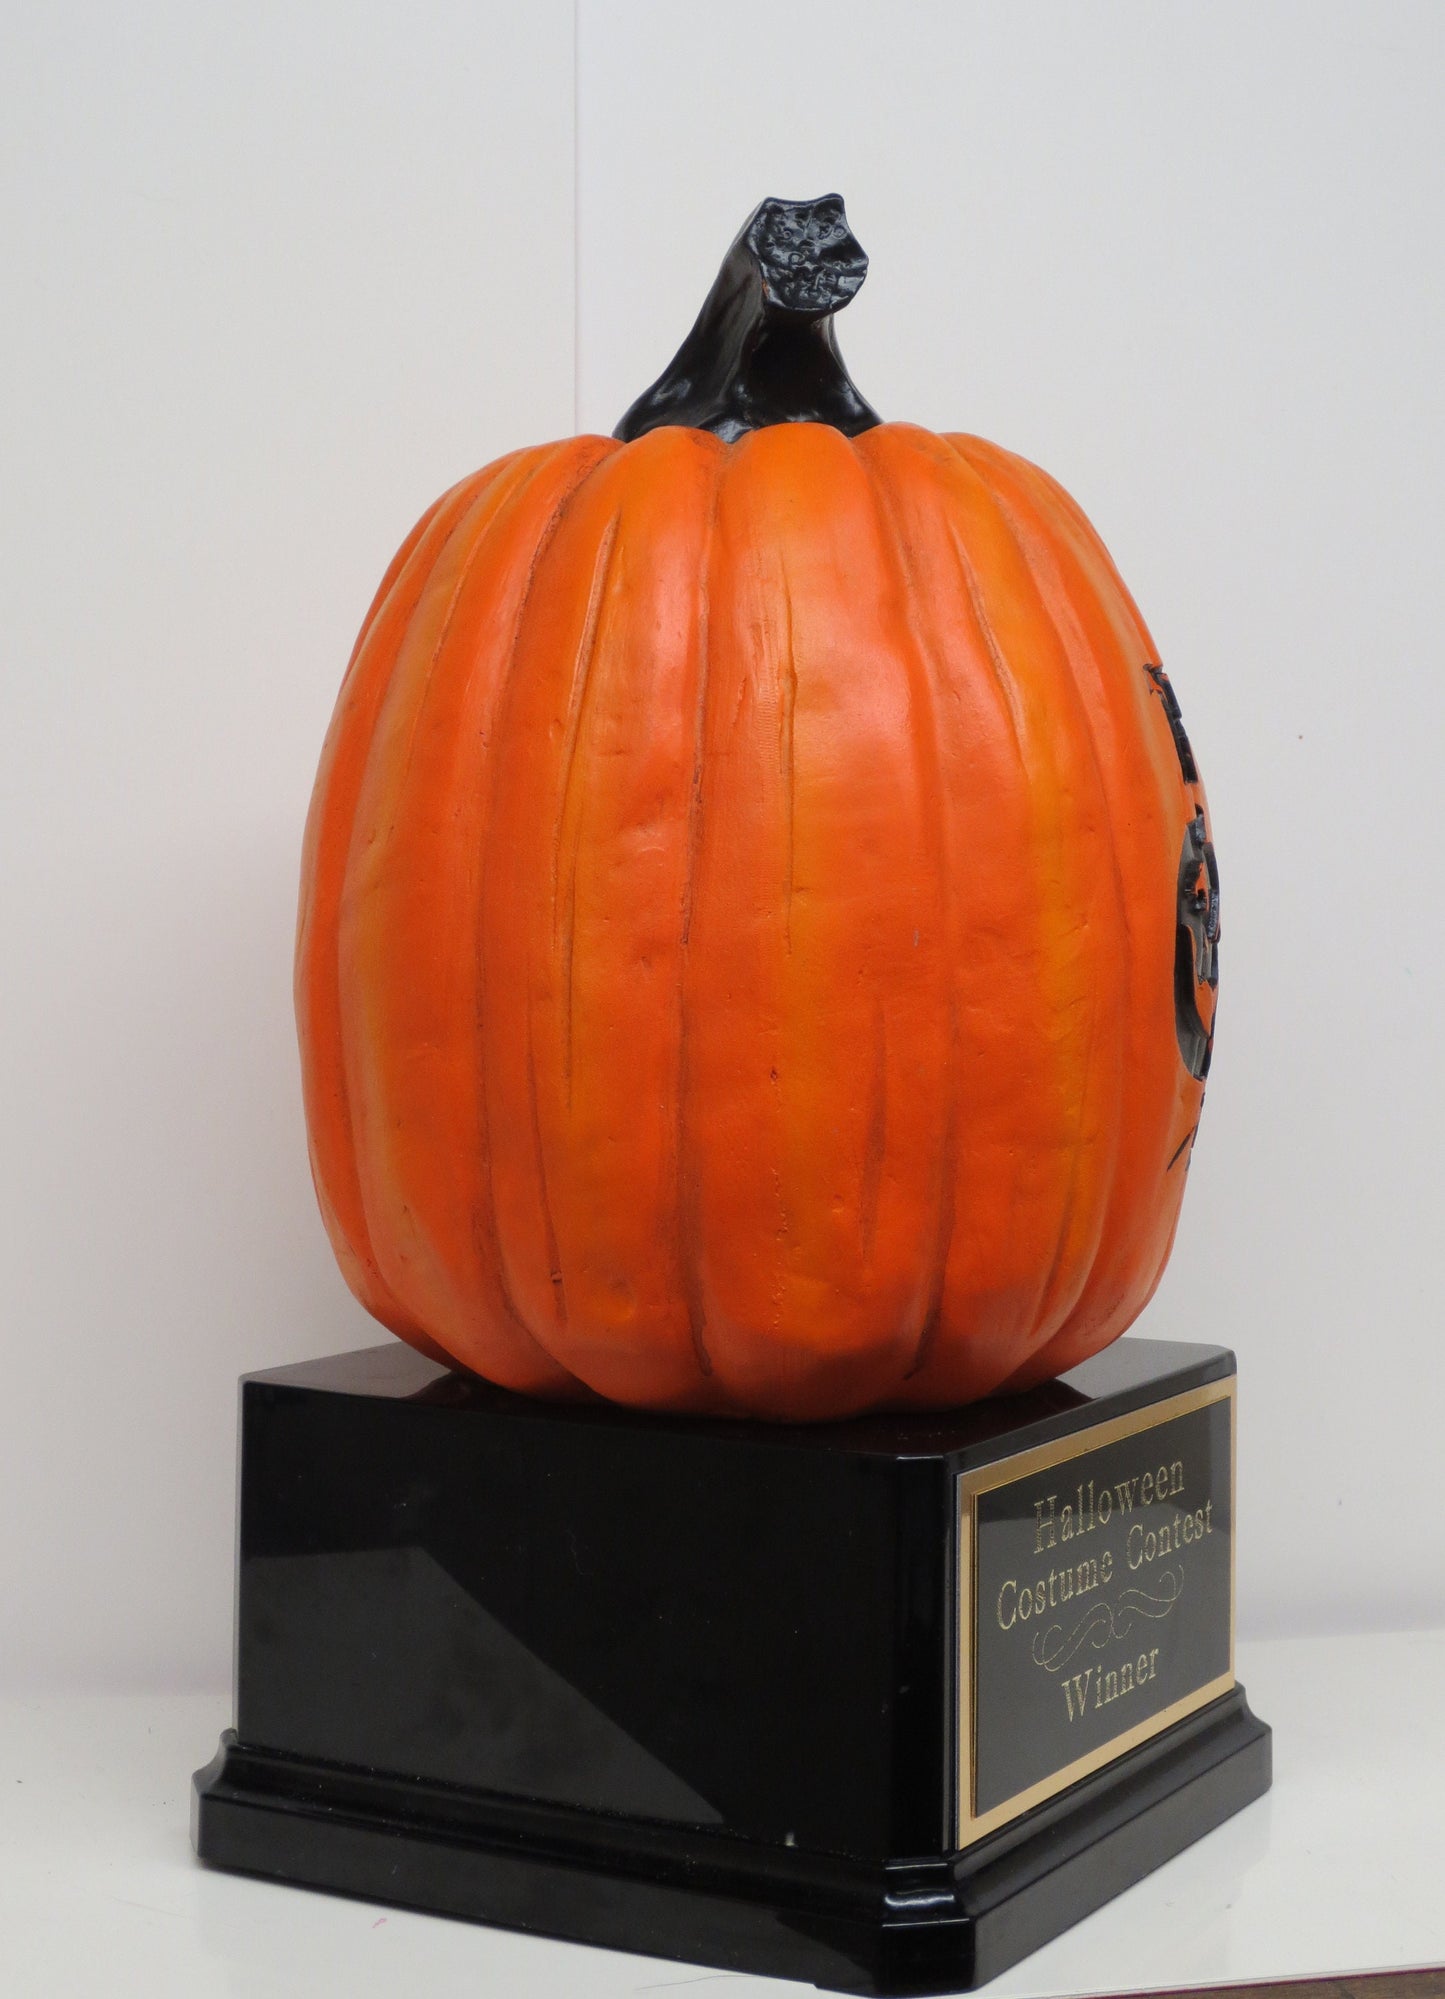 Halloween Trophy Trophies Best Costume Contest Pumpkin Carving Contest Scariest Costume Best Couple Jack O Lantern Halloween Decor